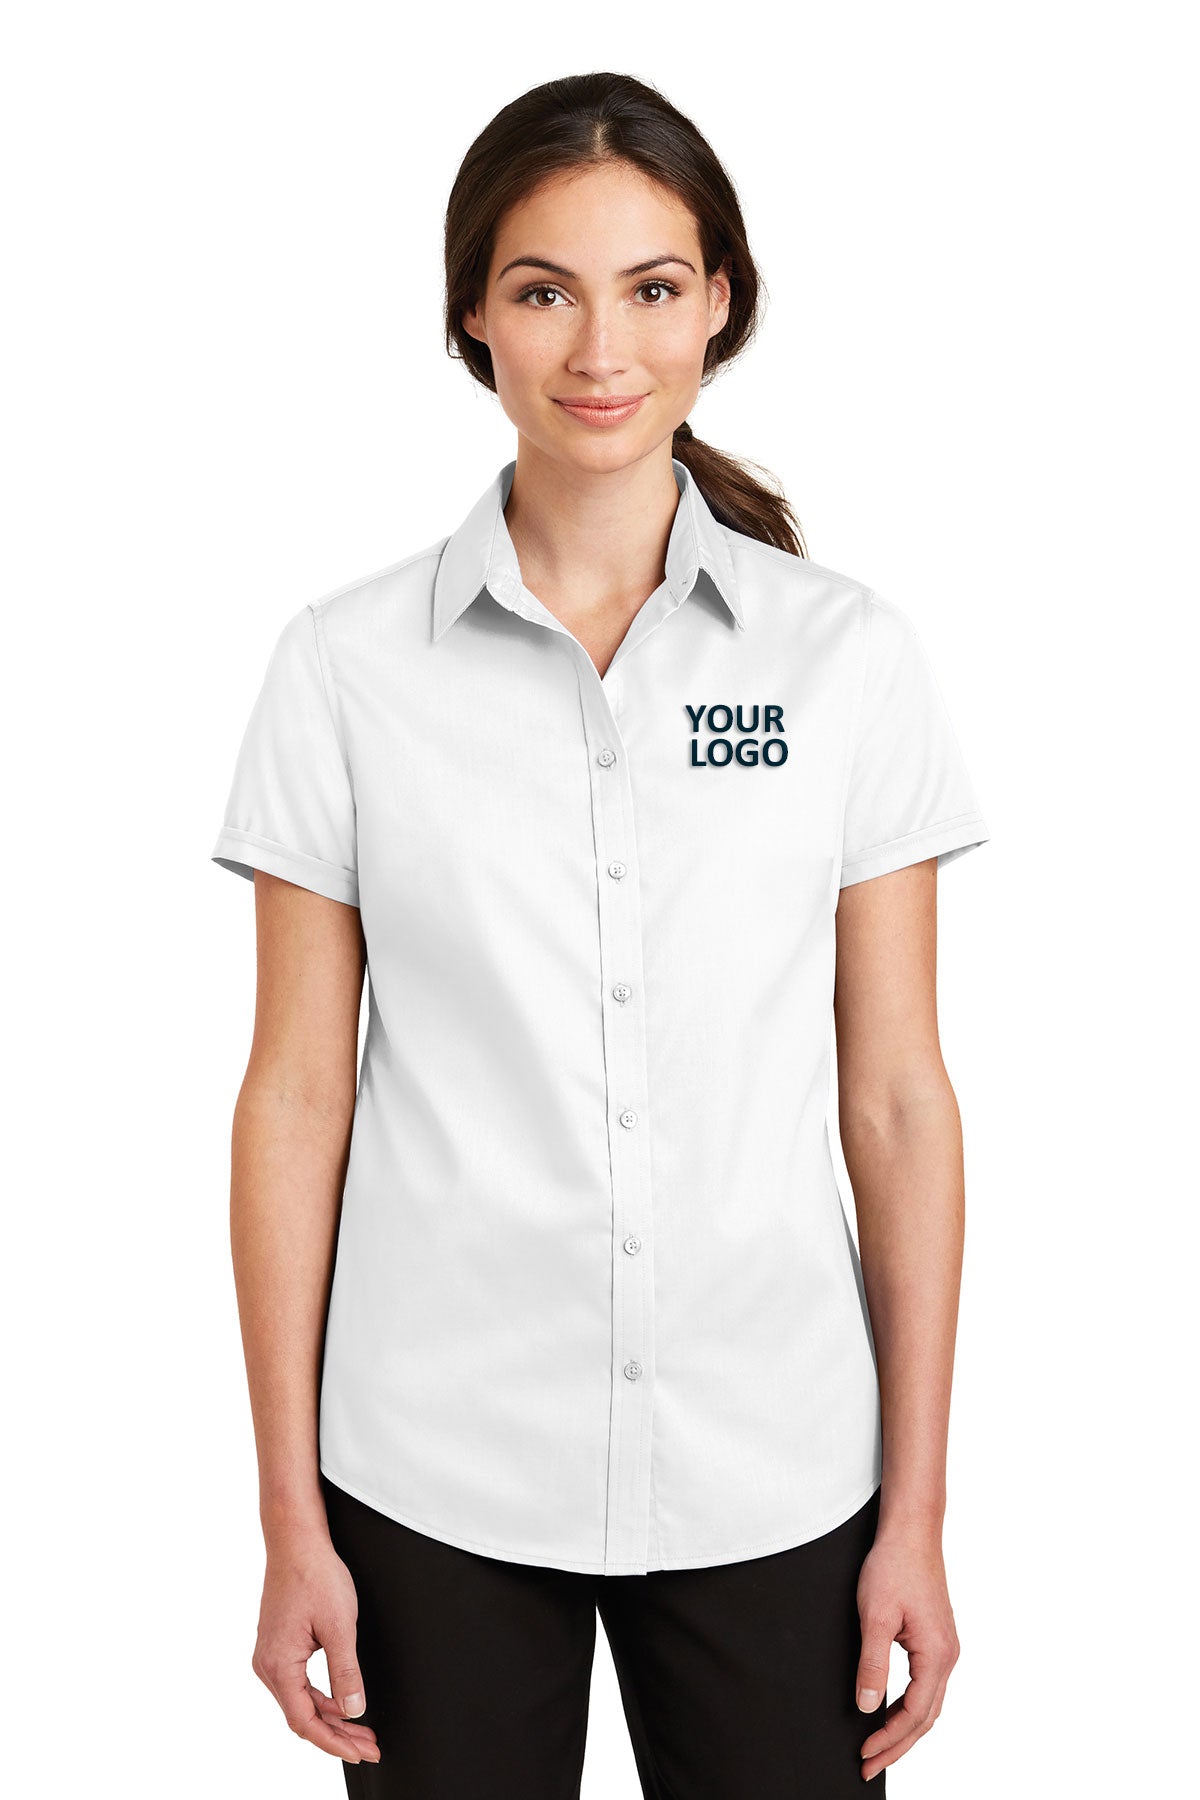 Port Authority White L664 custom logo shirts